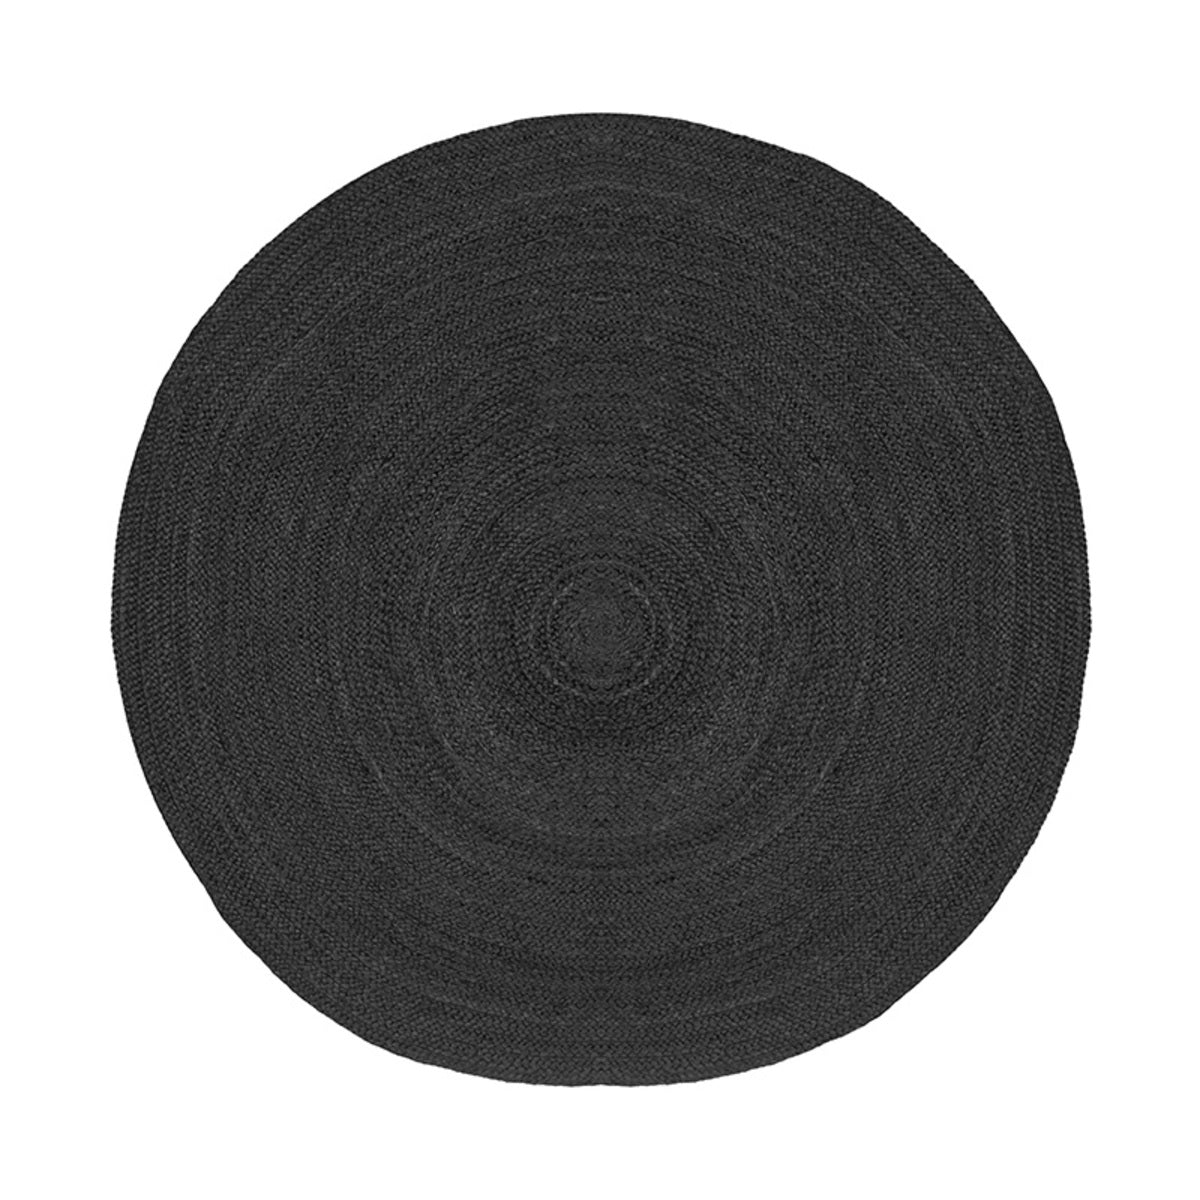 LABEL51 Rugs Jute - Black - Jute - 180x180 cm